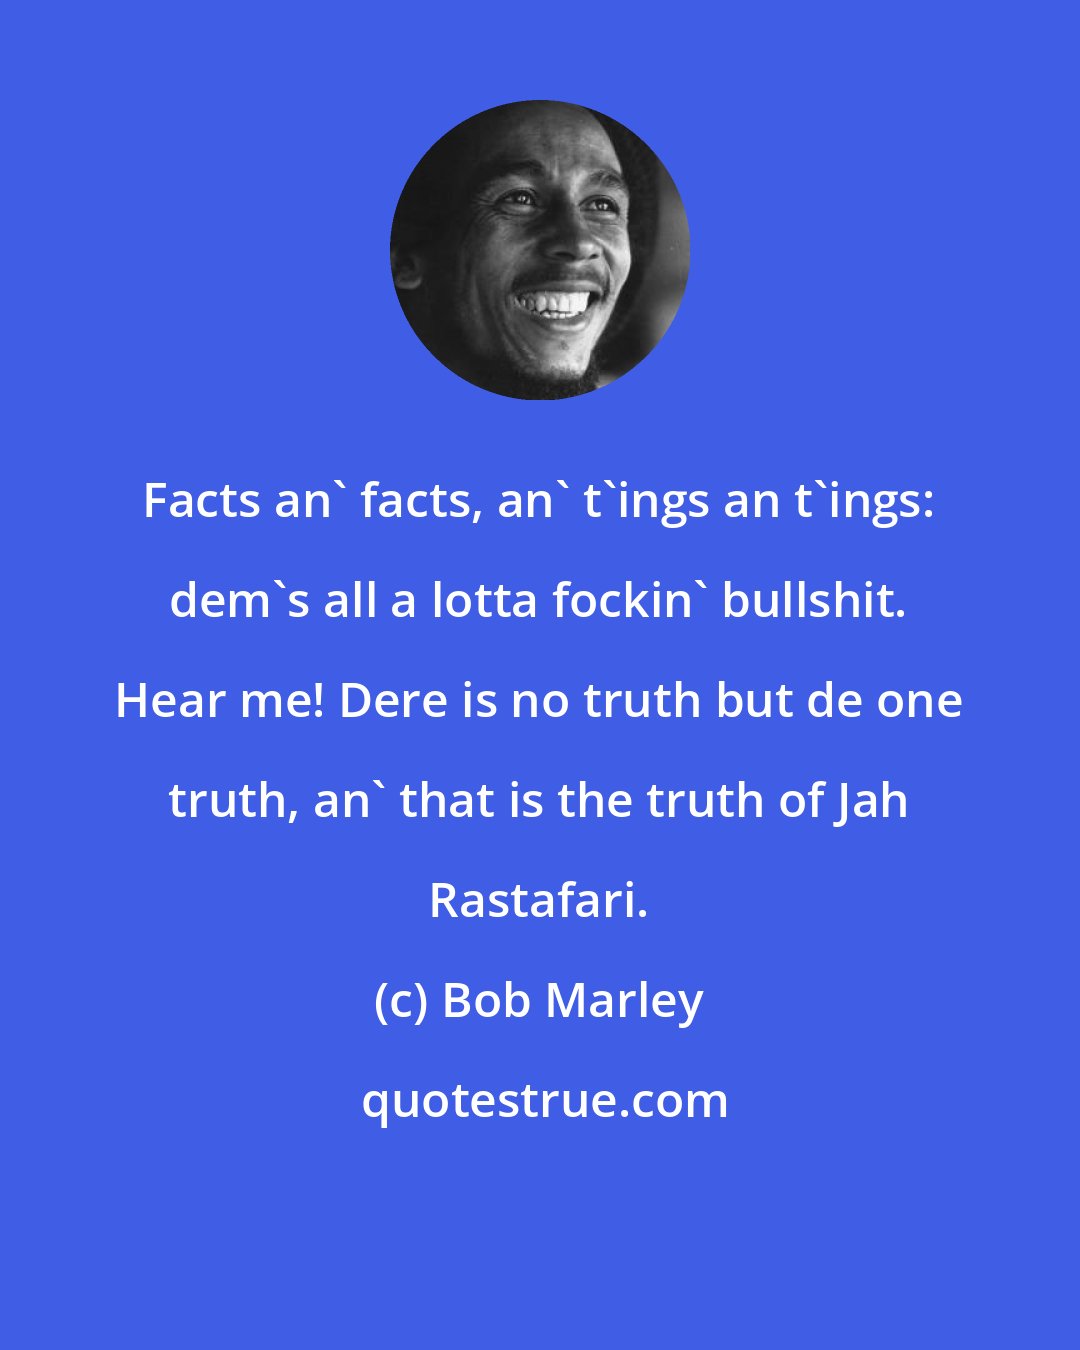 Bob Marley: Facts an' facts, an' t'ings an t'ings: dem's all a lotta fockin' bullshit. Hear me! Dere is no truth but de one truth, an' that is the truth of Jah Rastafari.